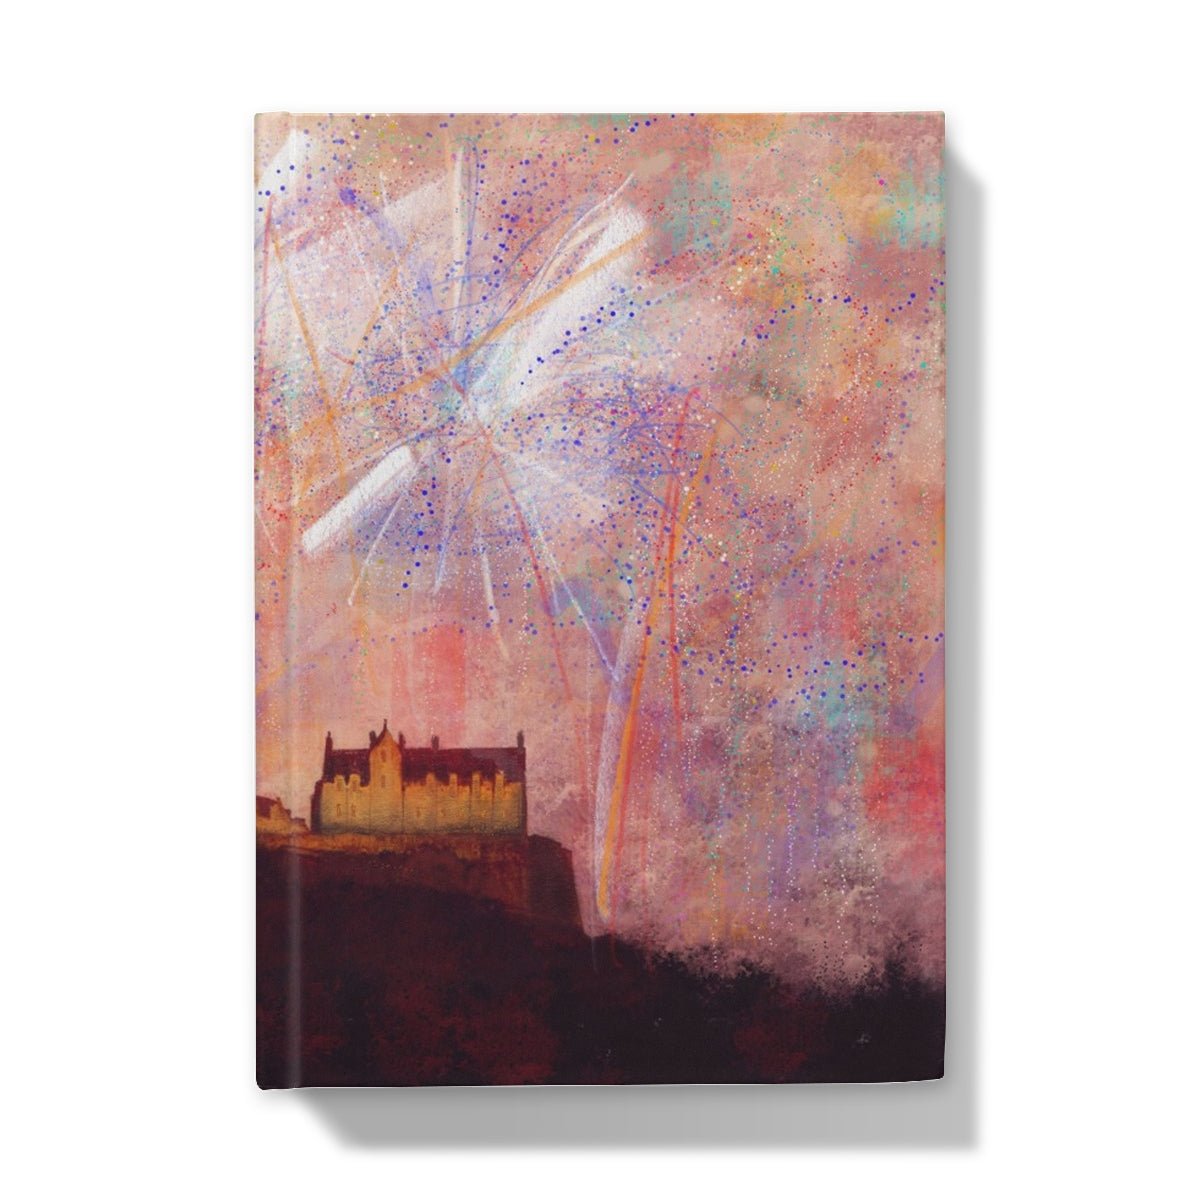 Edinburgh Castle Fireworks Art Gifts Hardback Journal-Journals & Notebooks-Edinburgh & Glasgow Art Gallery-A4-Lined-Paintings, Prints, Homeware, Art Gifts From Scotland By Scottish Artist Kevin Hunter